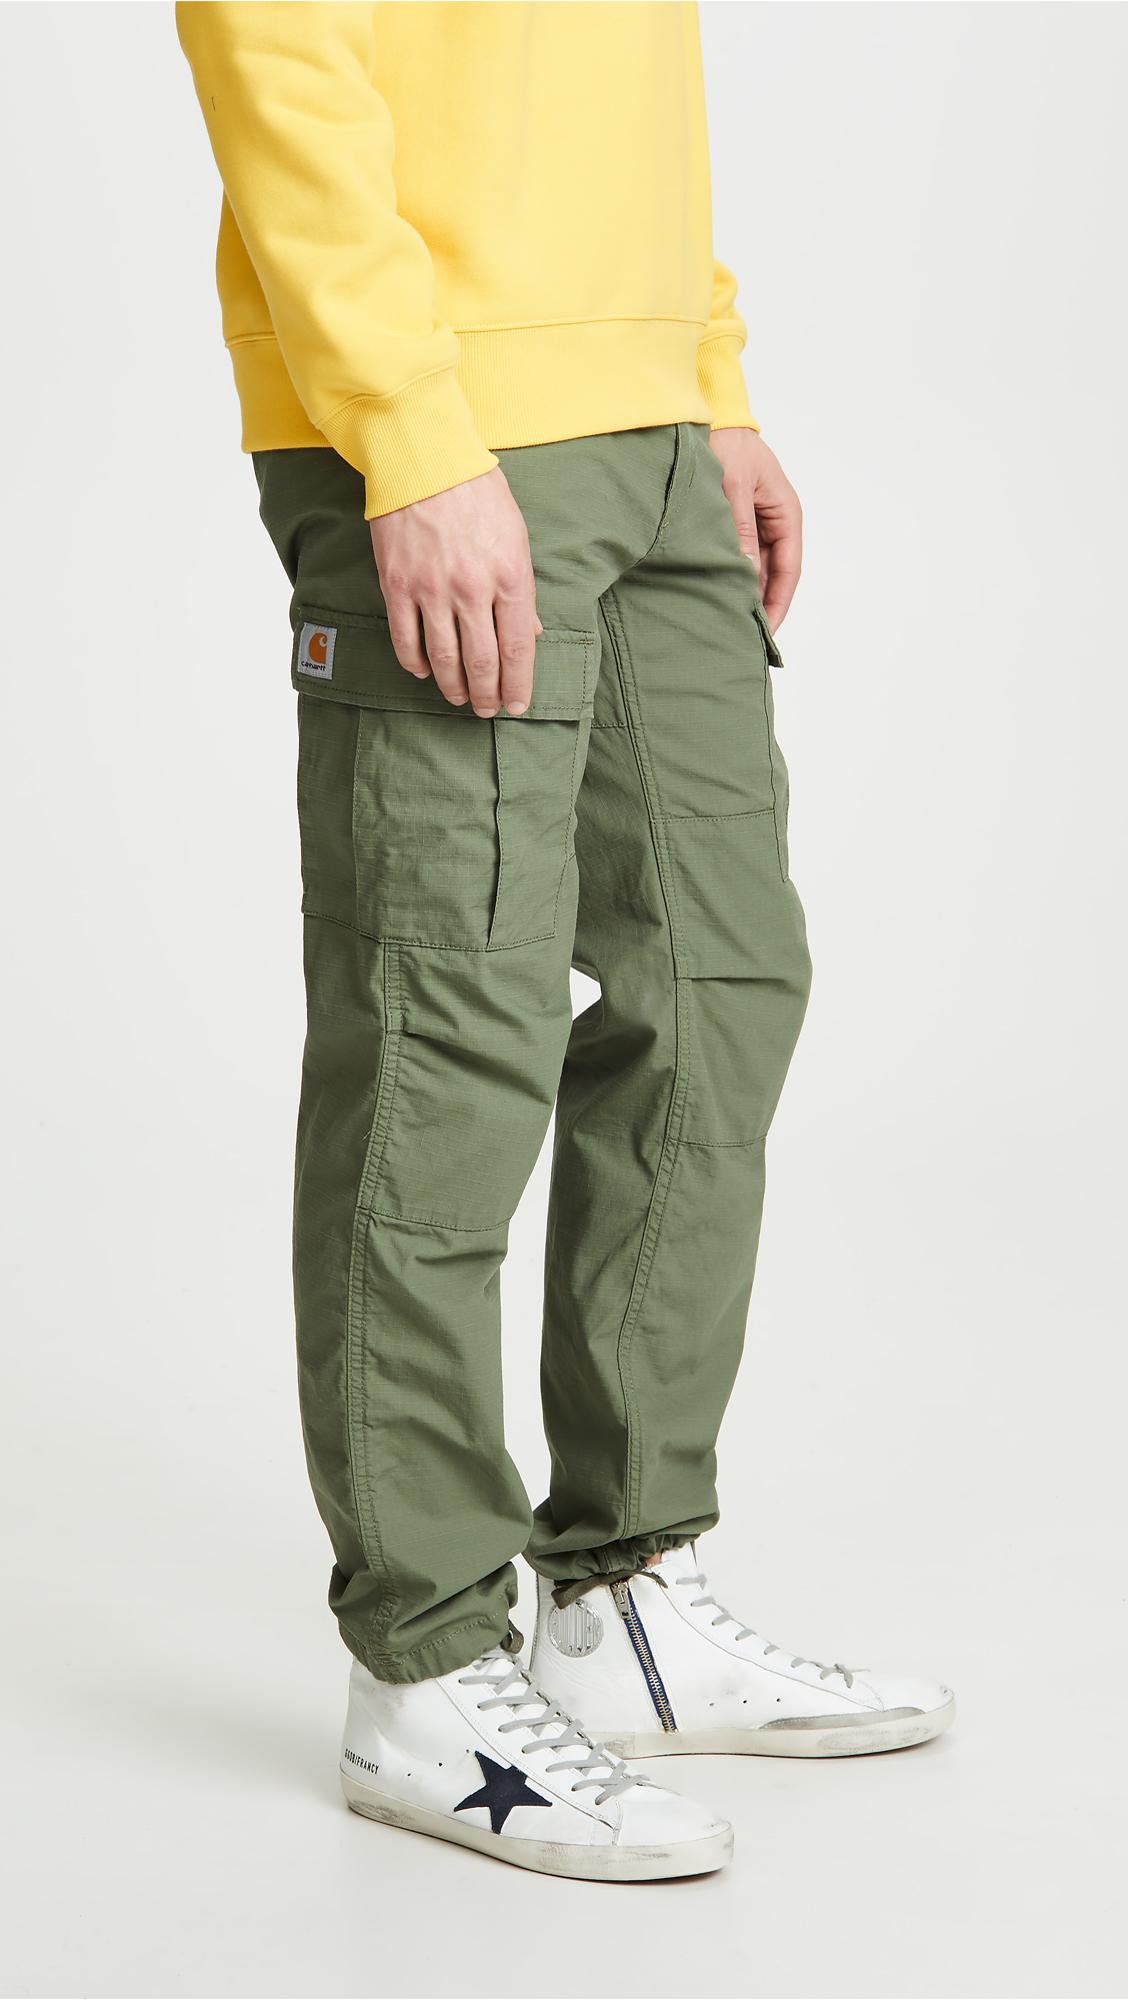 Carhartt WIP Cotton Aviation Cargo Pants in Green for Men - Lyst